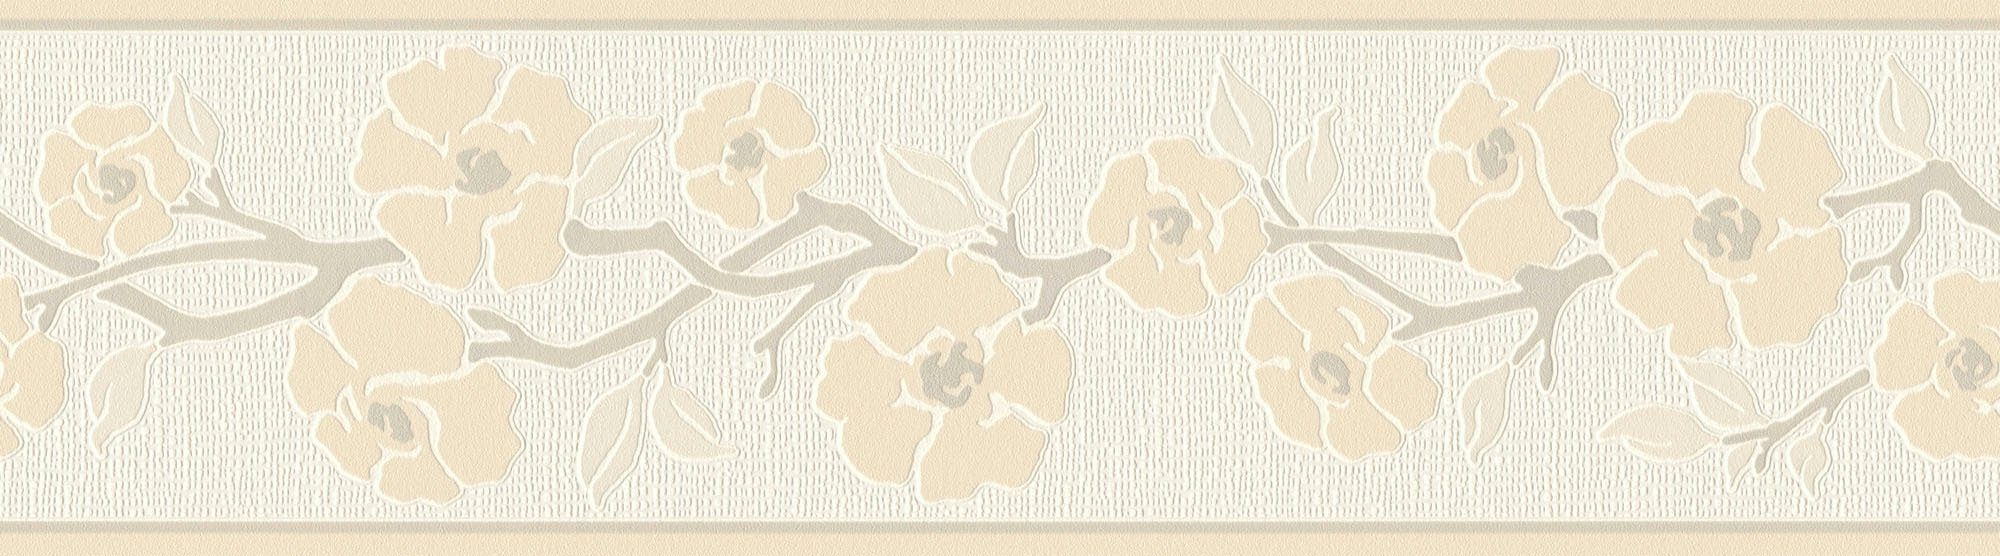 Création floral, A.S. Blumen Bordüre natürlich, beige/creme Tapete strukturiert, Borders Only Blumen Bordüre 11, geblümt,